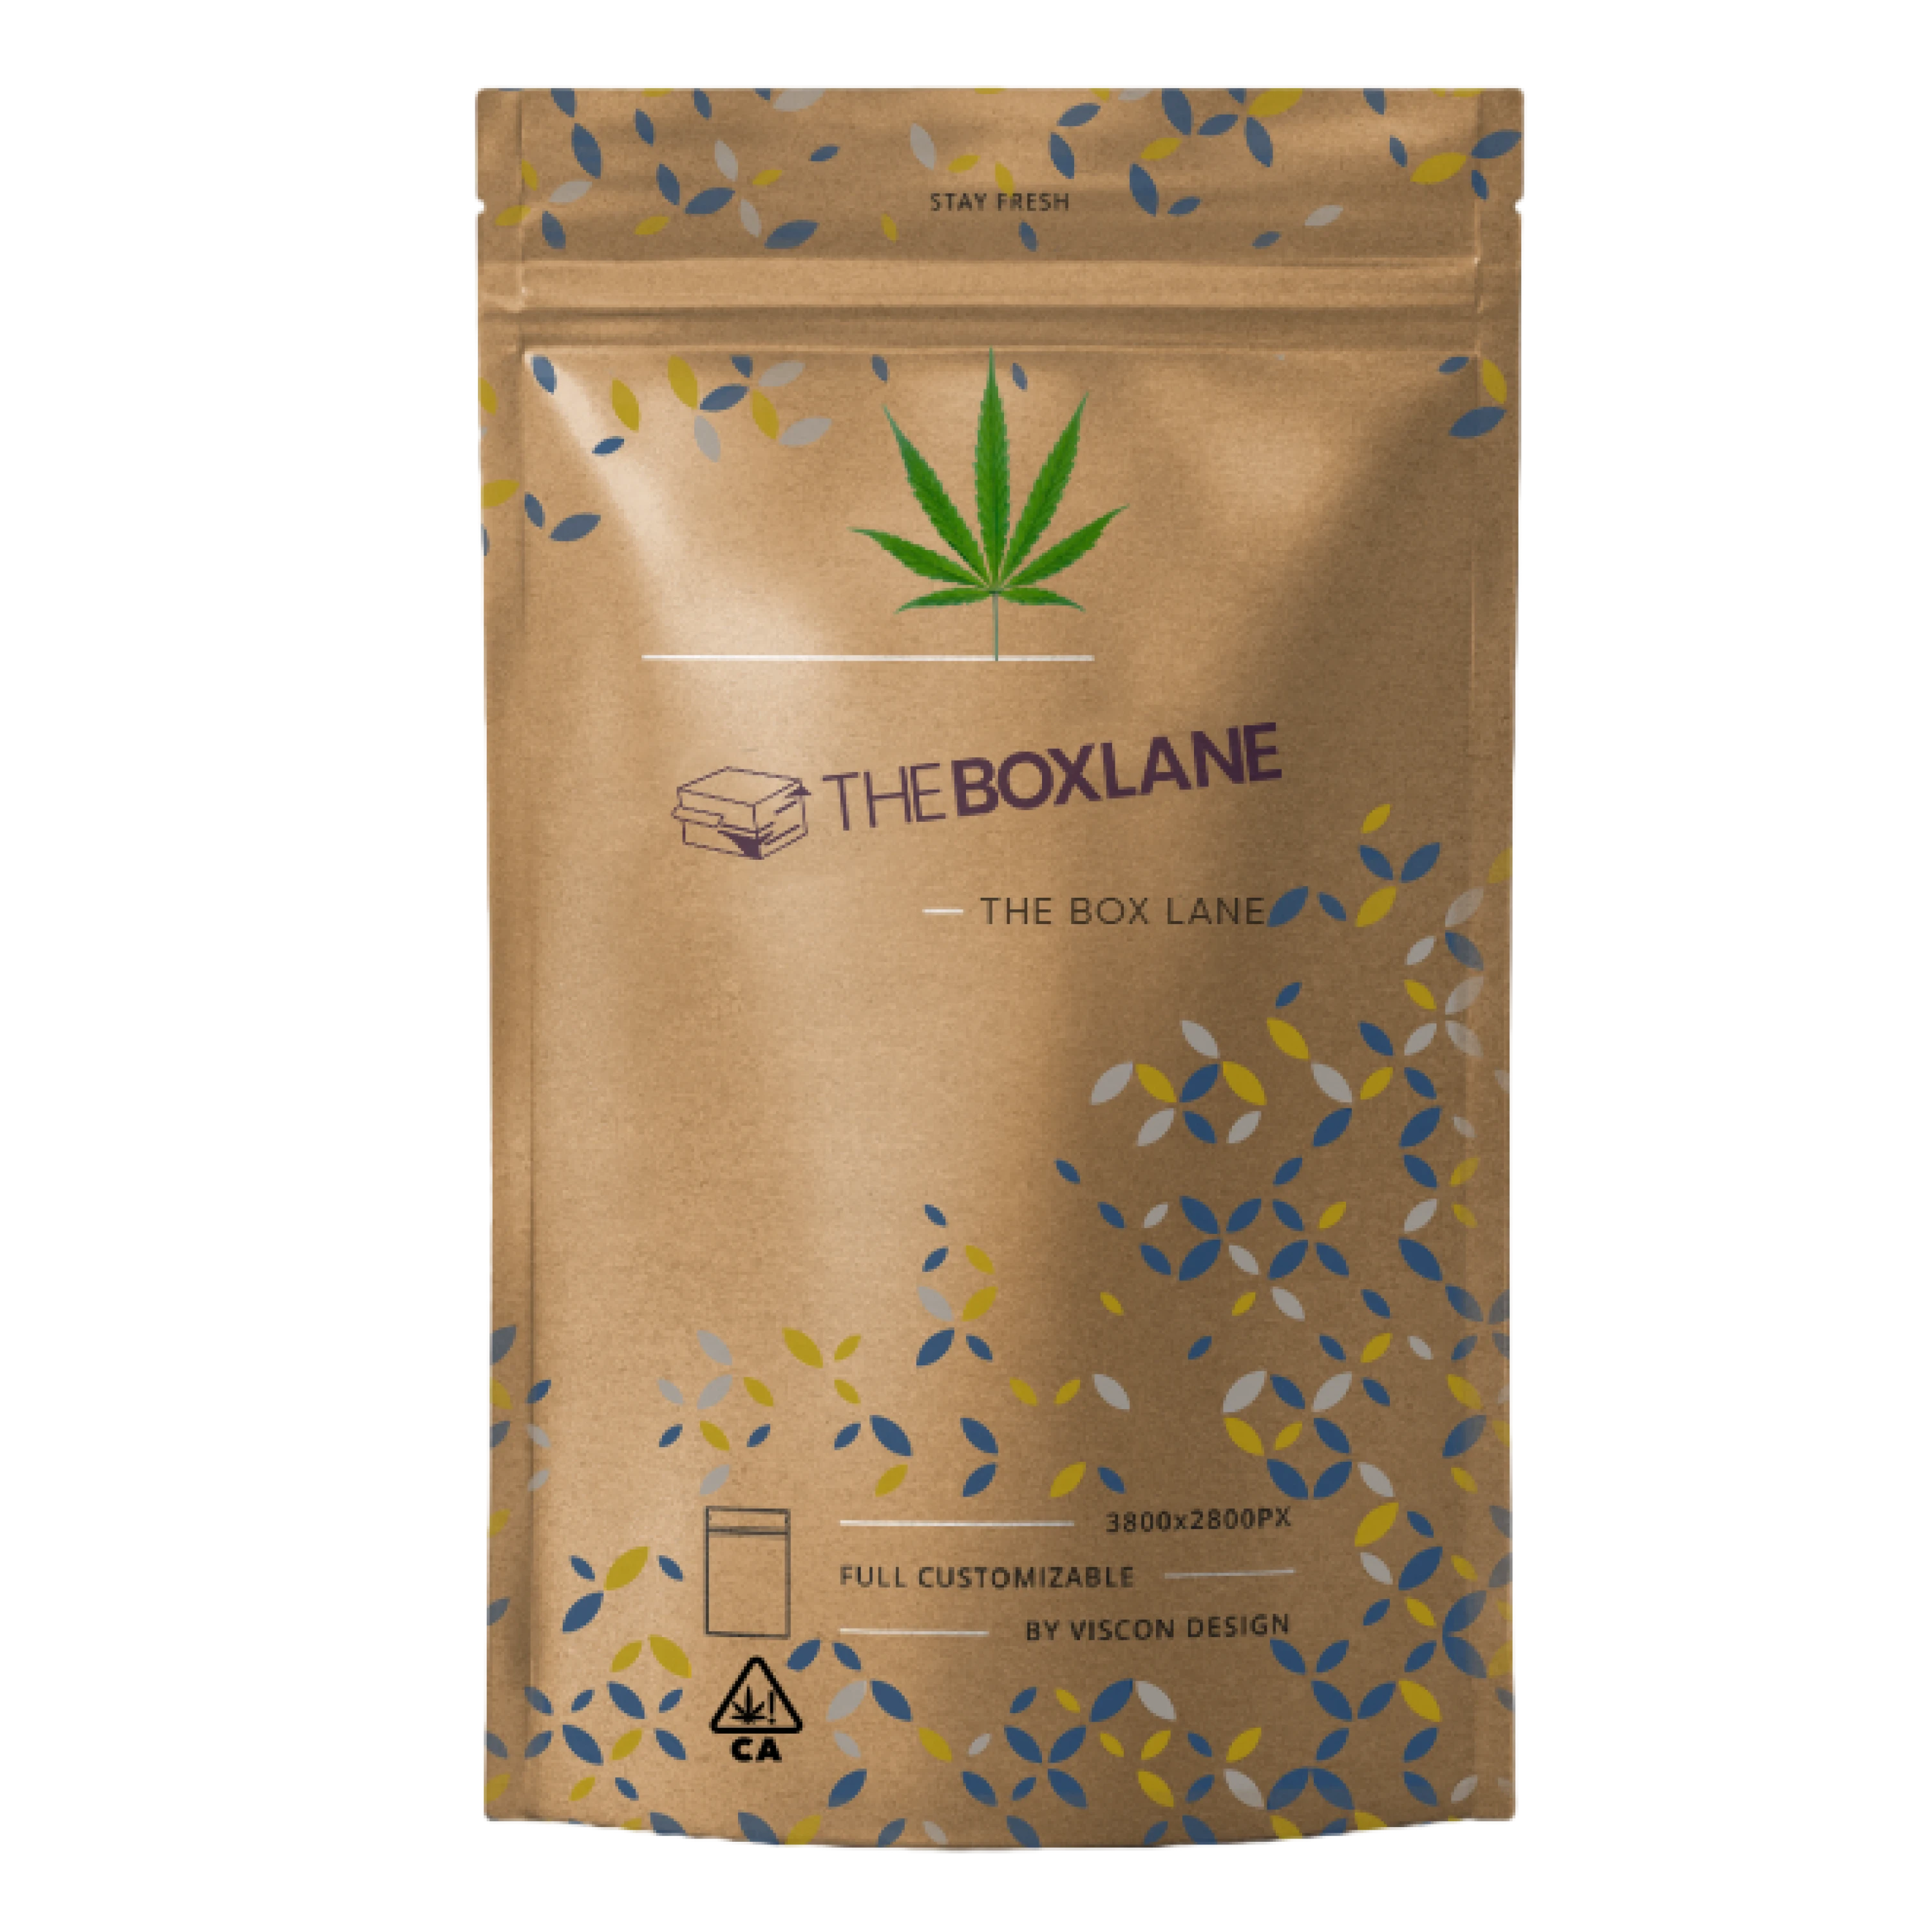 Carousel cannabis mylar bags packaging image 2 | The Box Lane